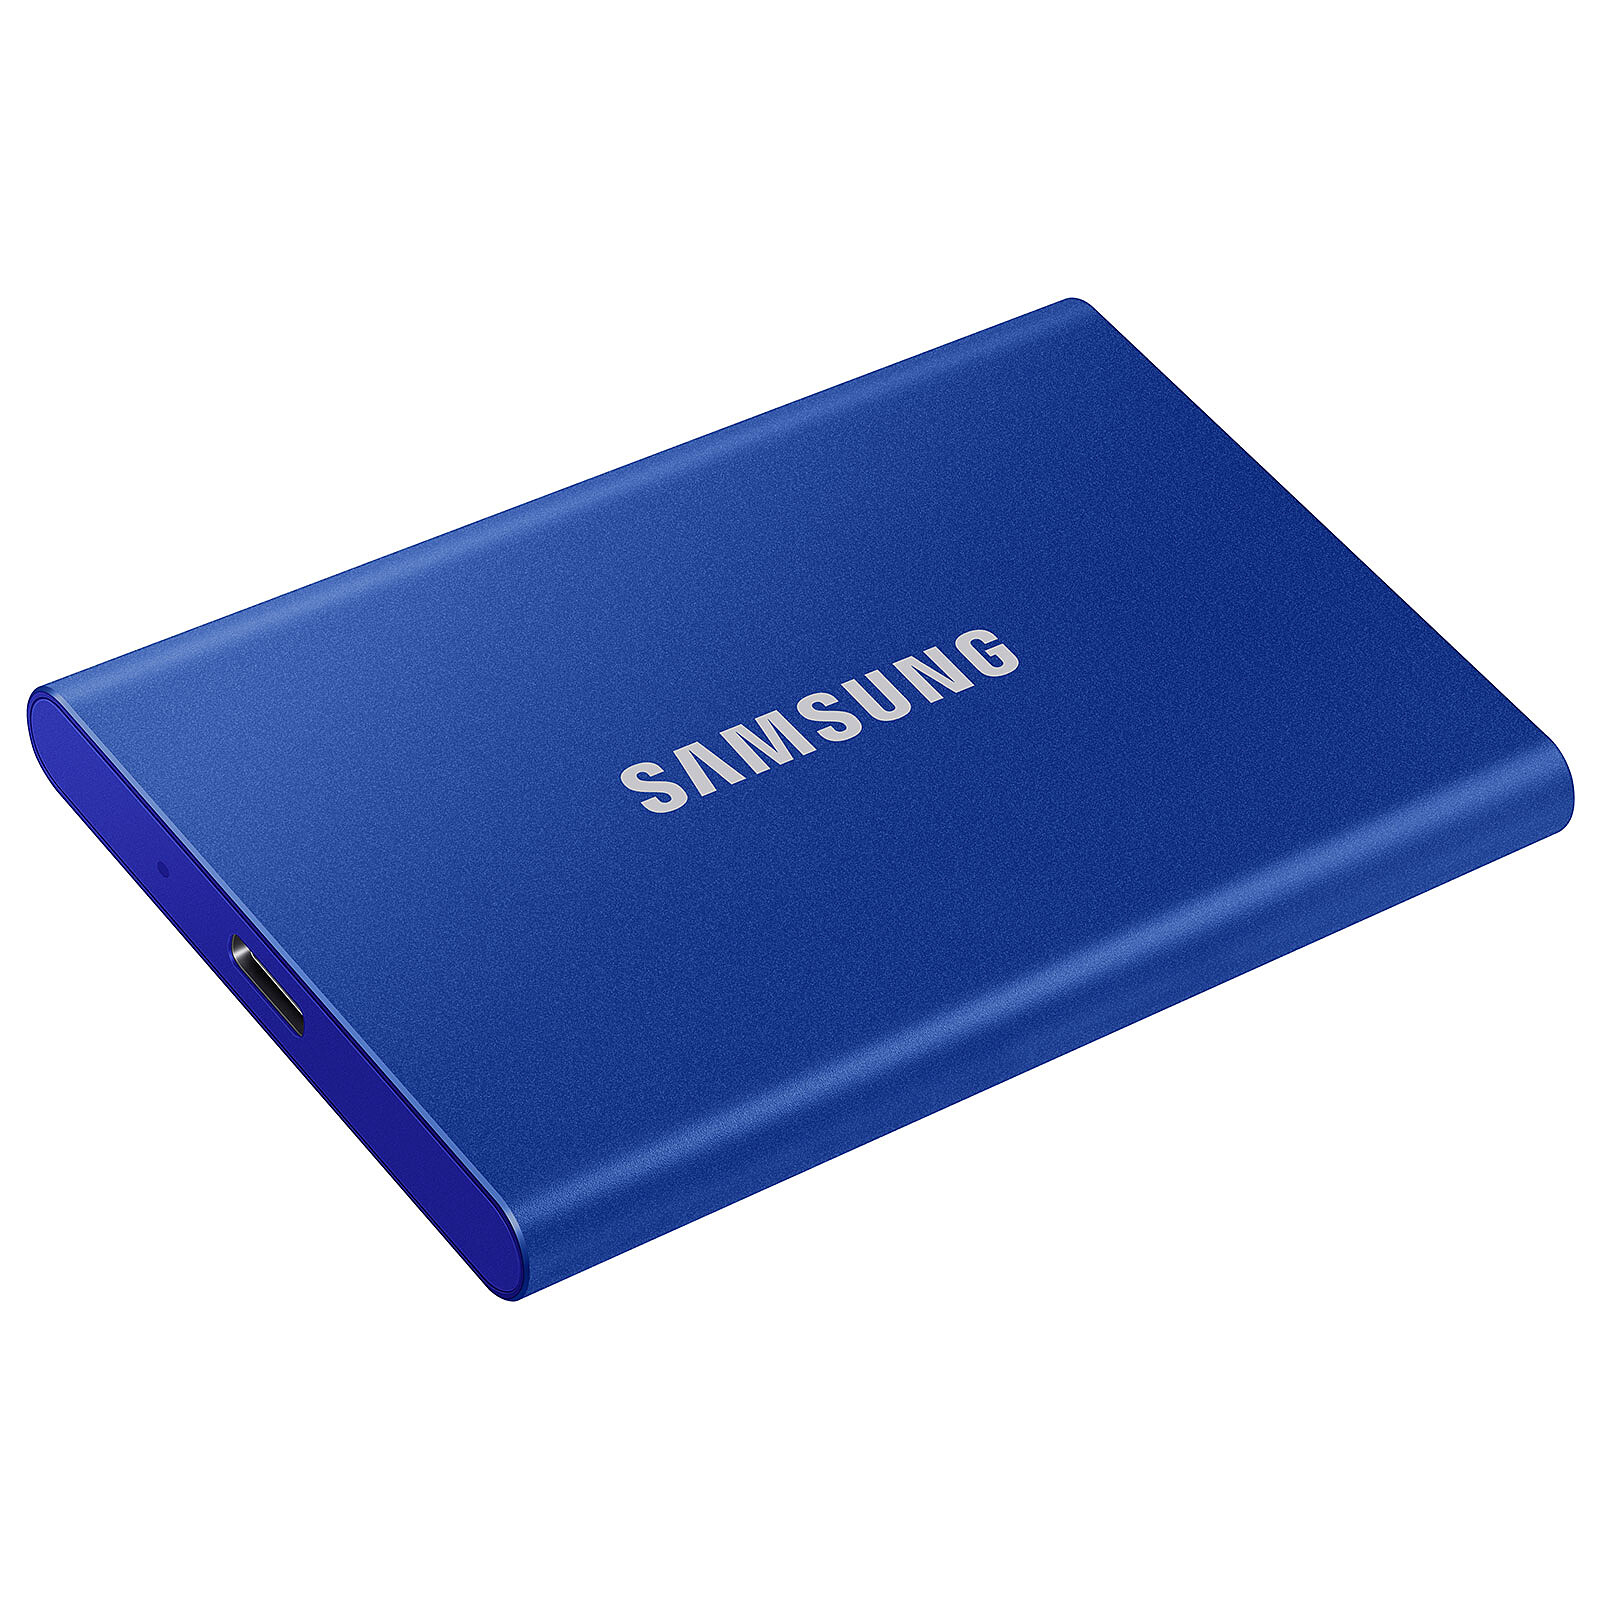 Samsung - Disque dur SSD externe SAMSUNG Portable 2To T7 Shield Bleu